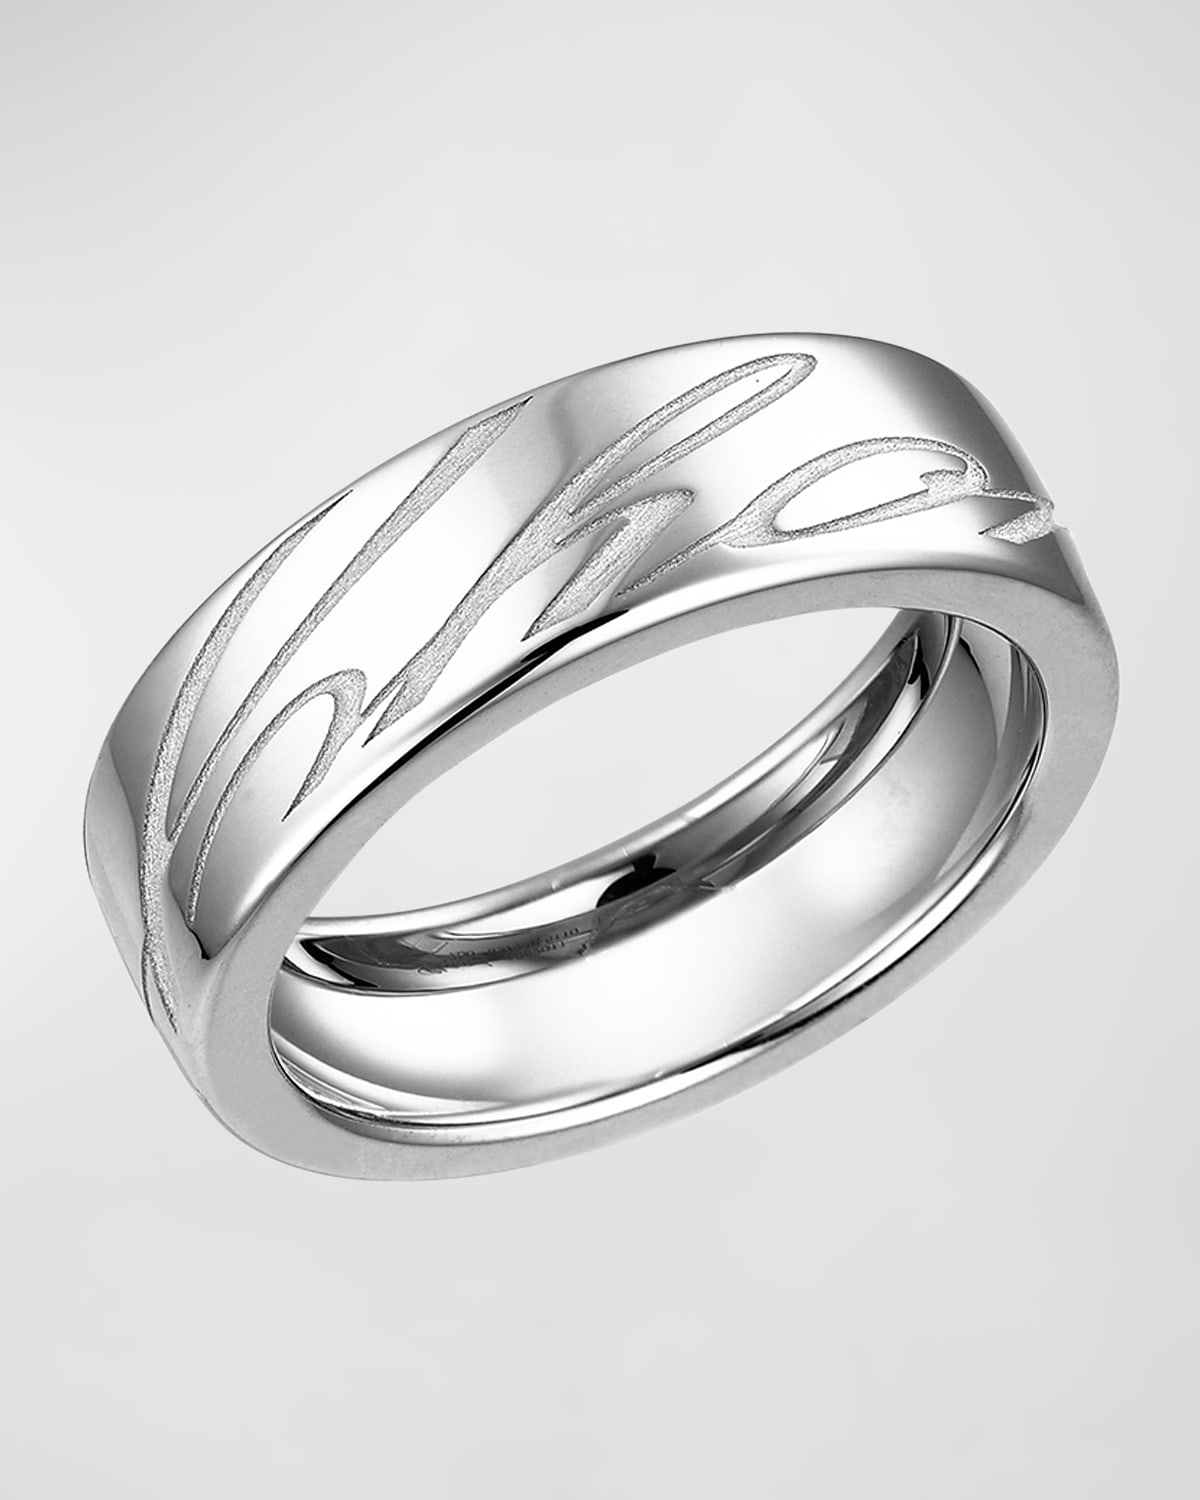 Chopardissmo 18K White Gold Ring, EU 56 / US 7.5